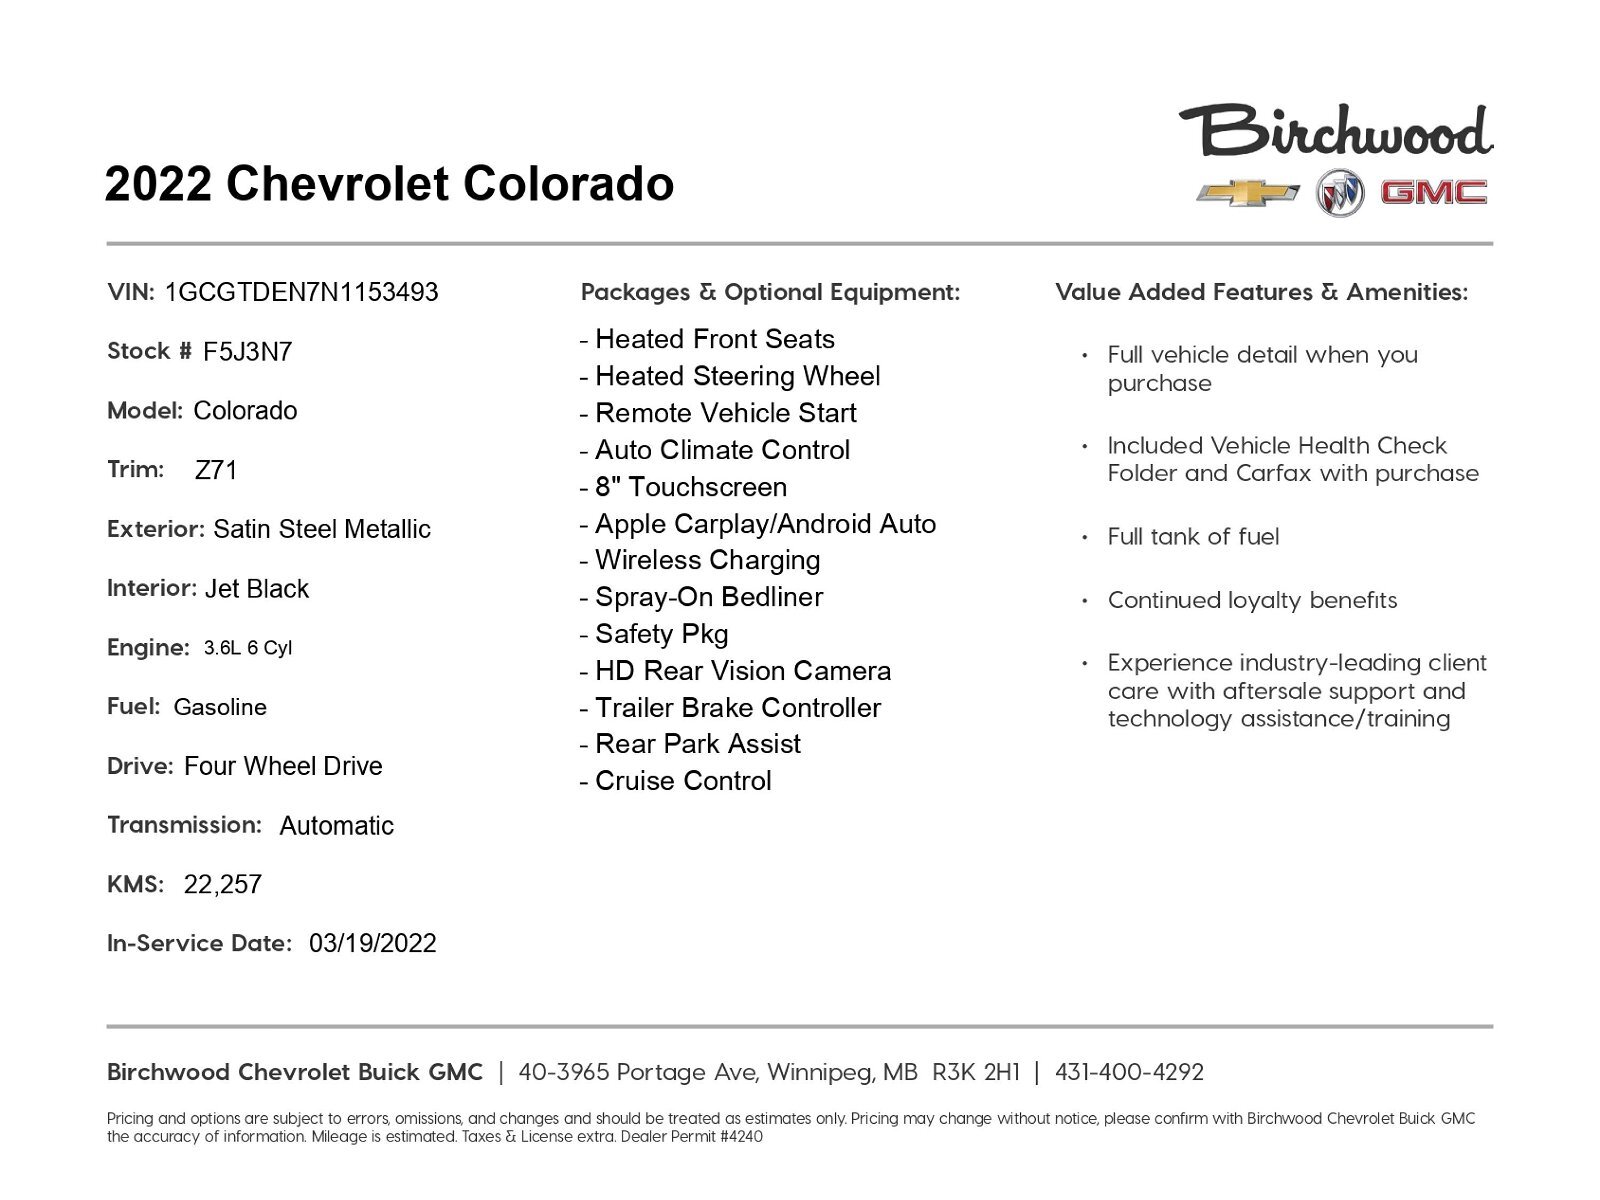 2022 Chevrolet Colorado 4WD Z71 2-year Maintenance Free!